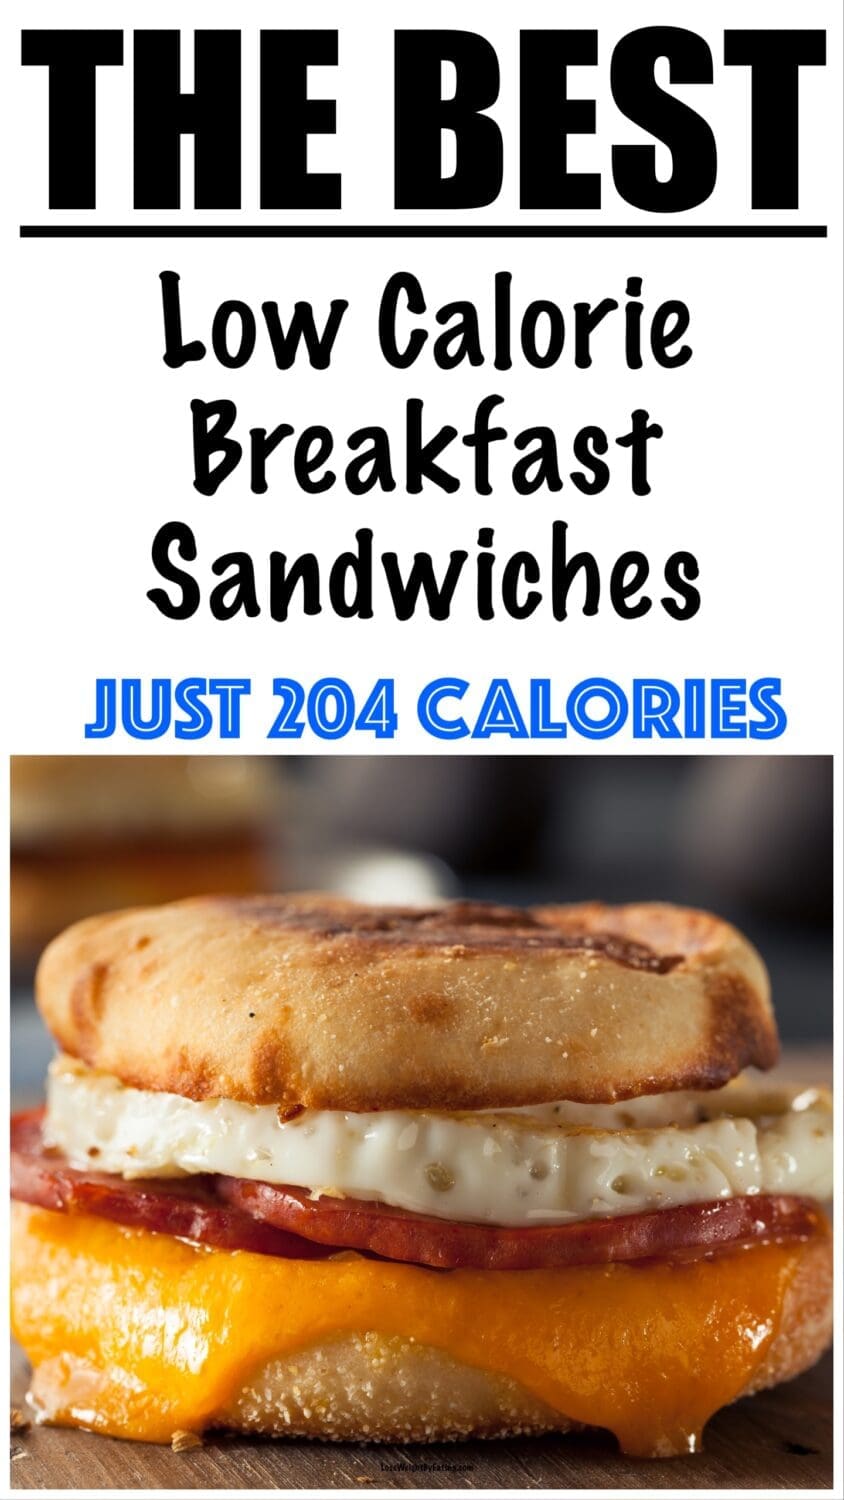 Low Calorie Breakfast Sandwiches